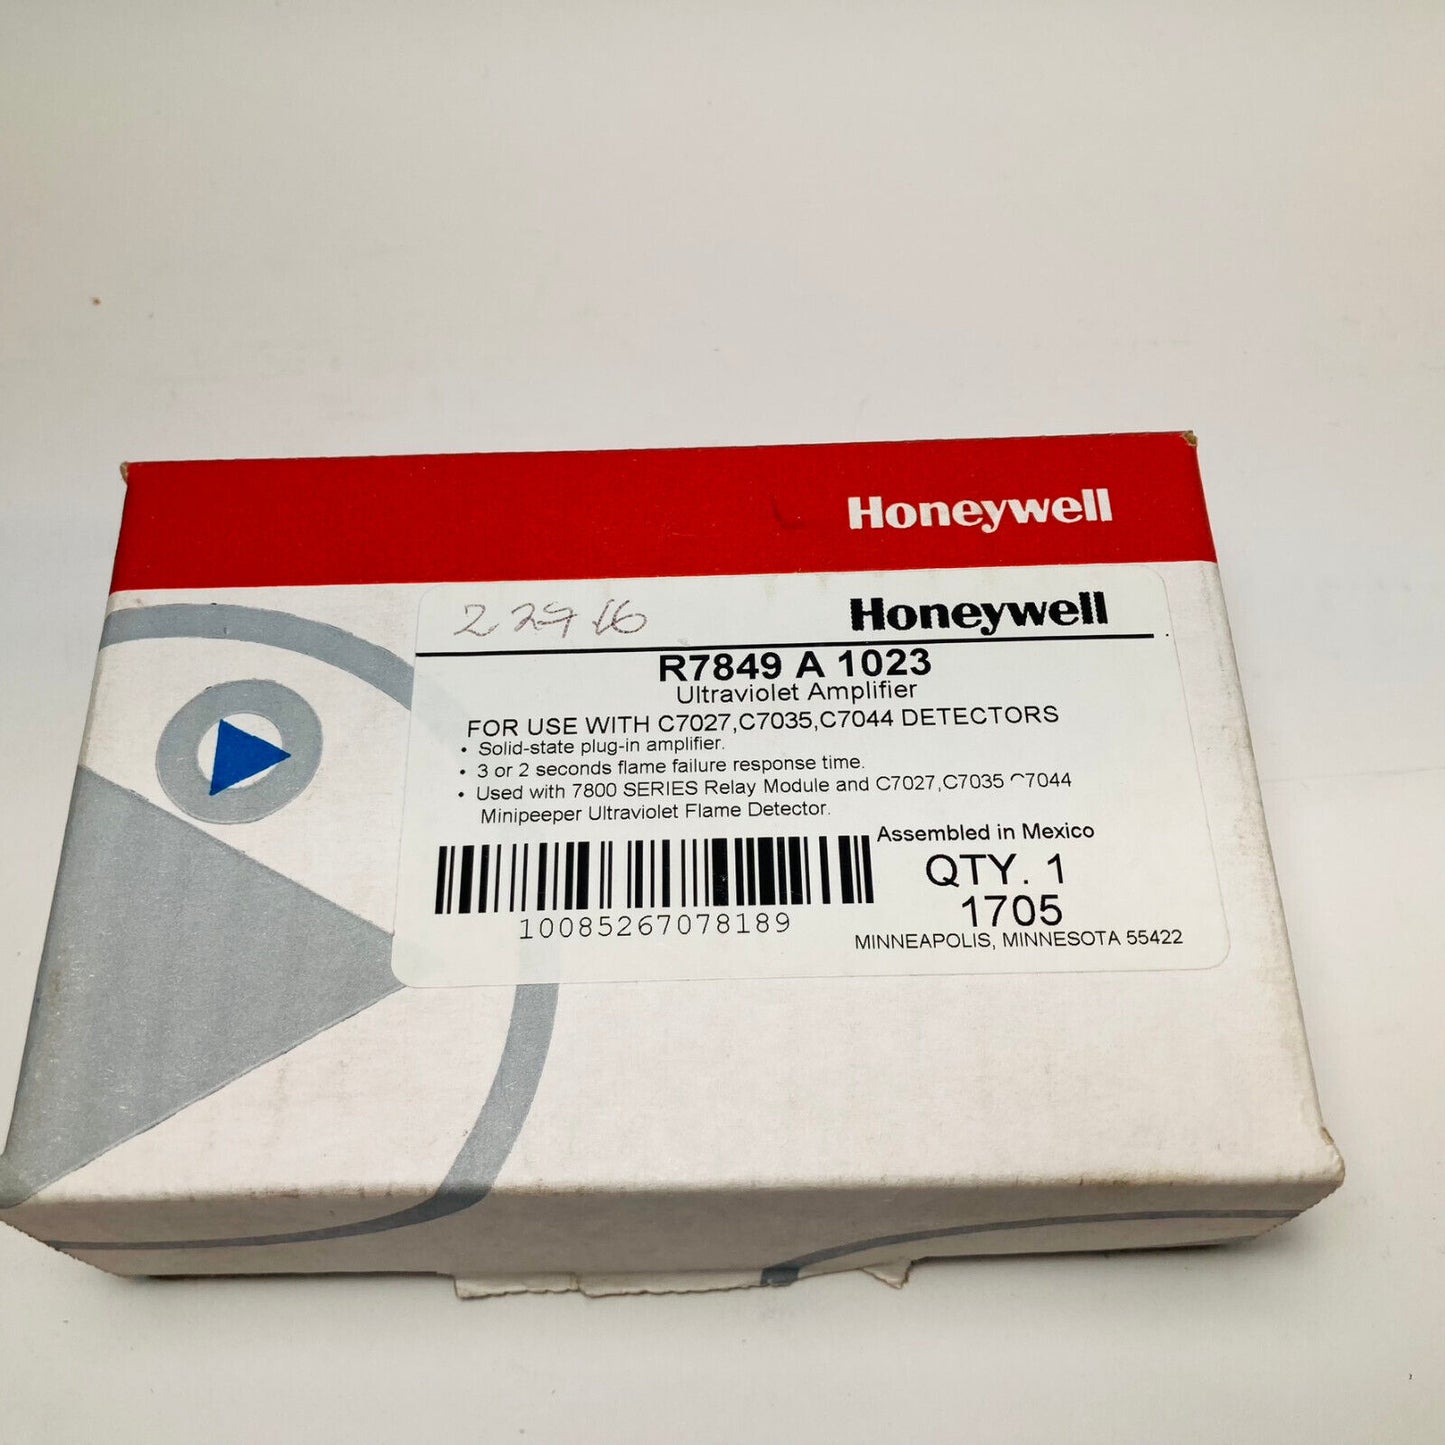 Honeywell  R7849 A 1023 Ultraviolet Flame Amplifier R7849A1023